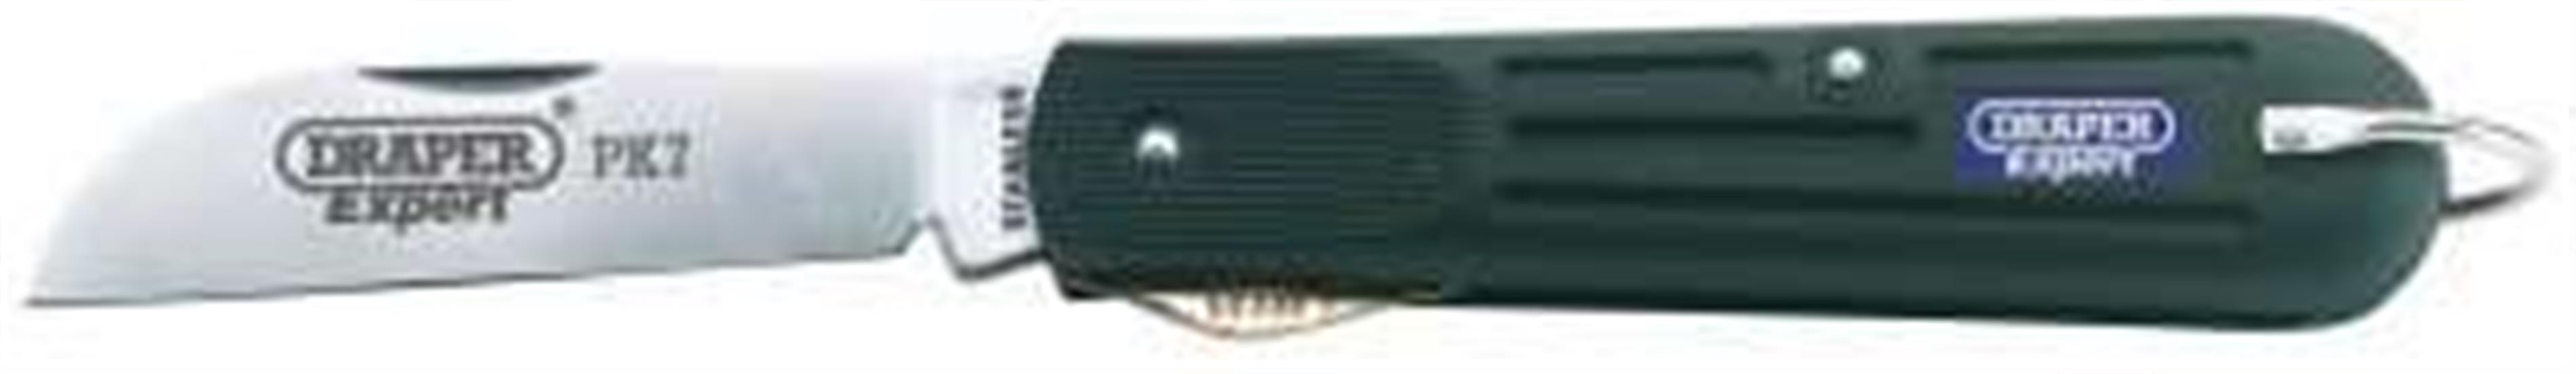 Draper 66258 (Pk7) - Draper Expert Lockable Sheepfoot Pocket Knife